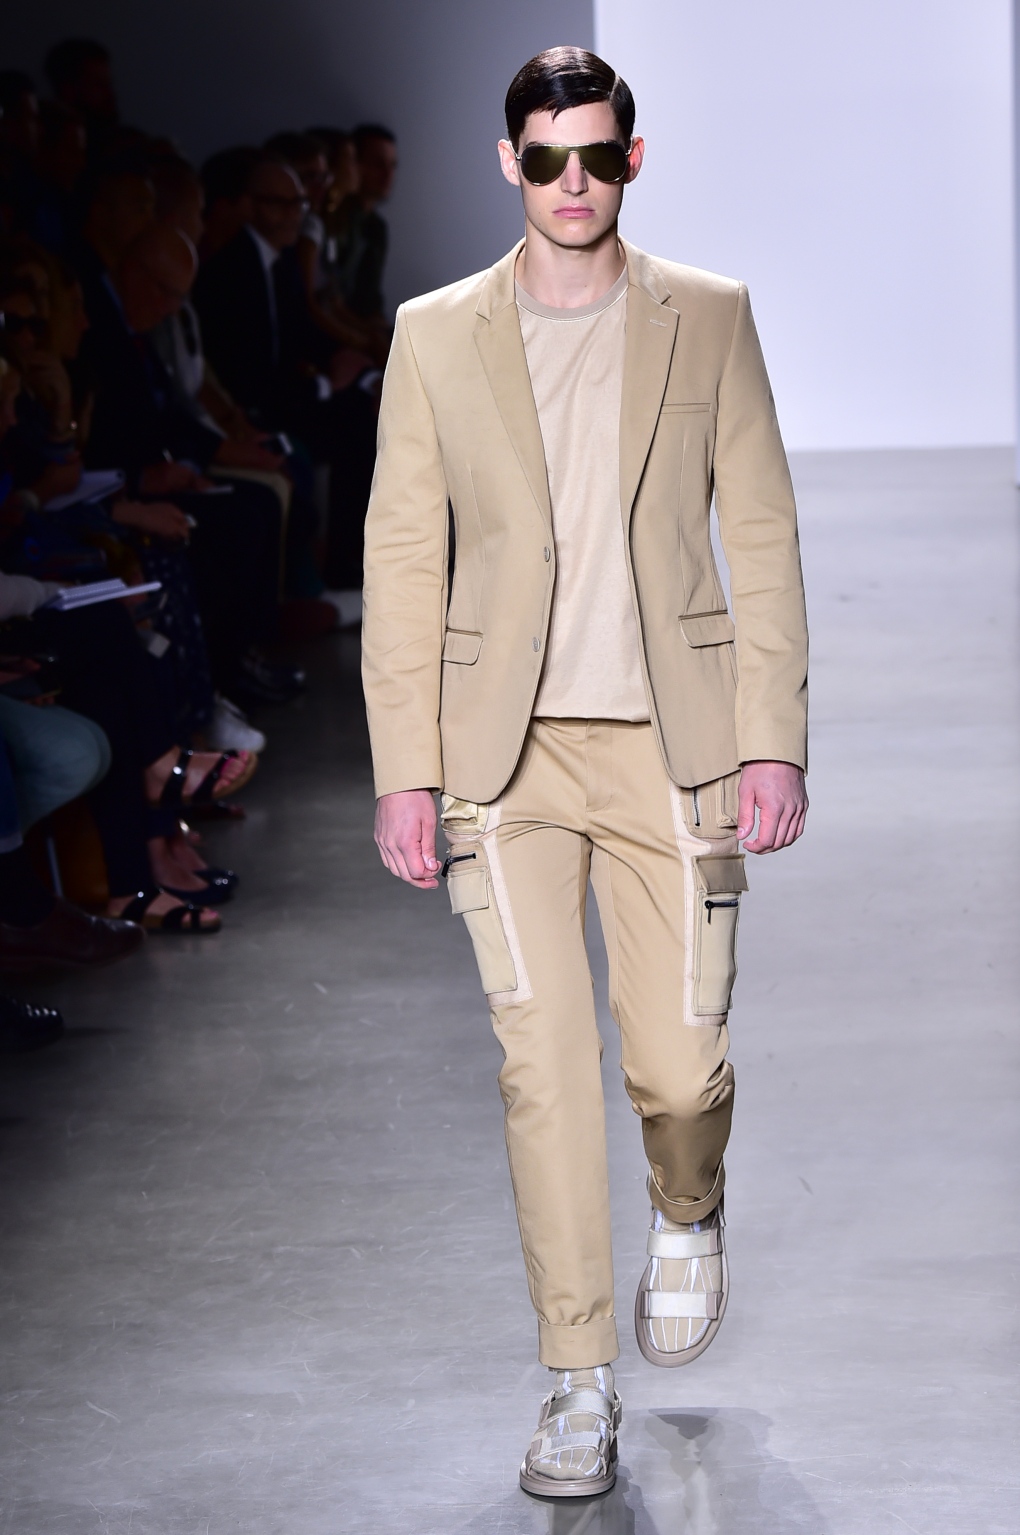 Firstever New York Men's Fashion Week hits the runway CTV News